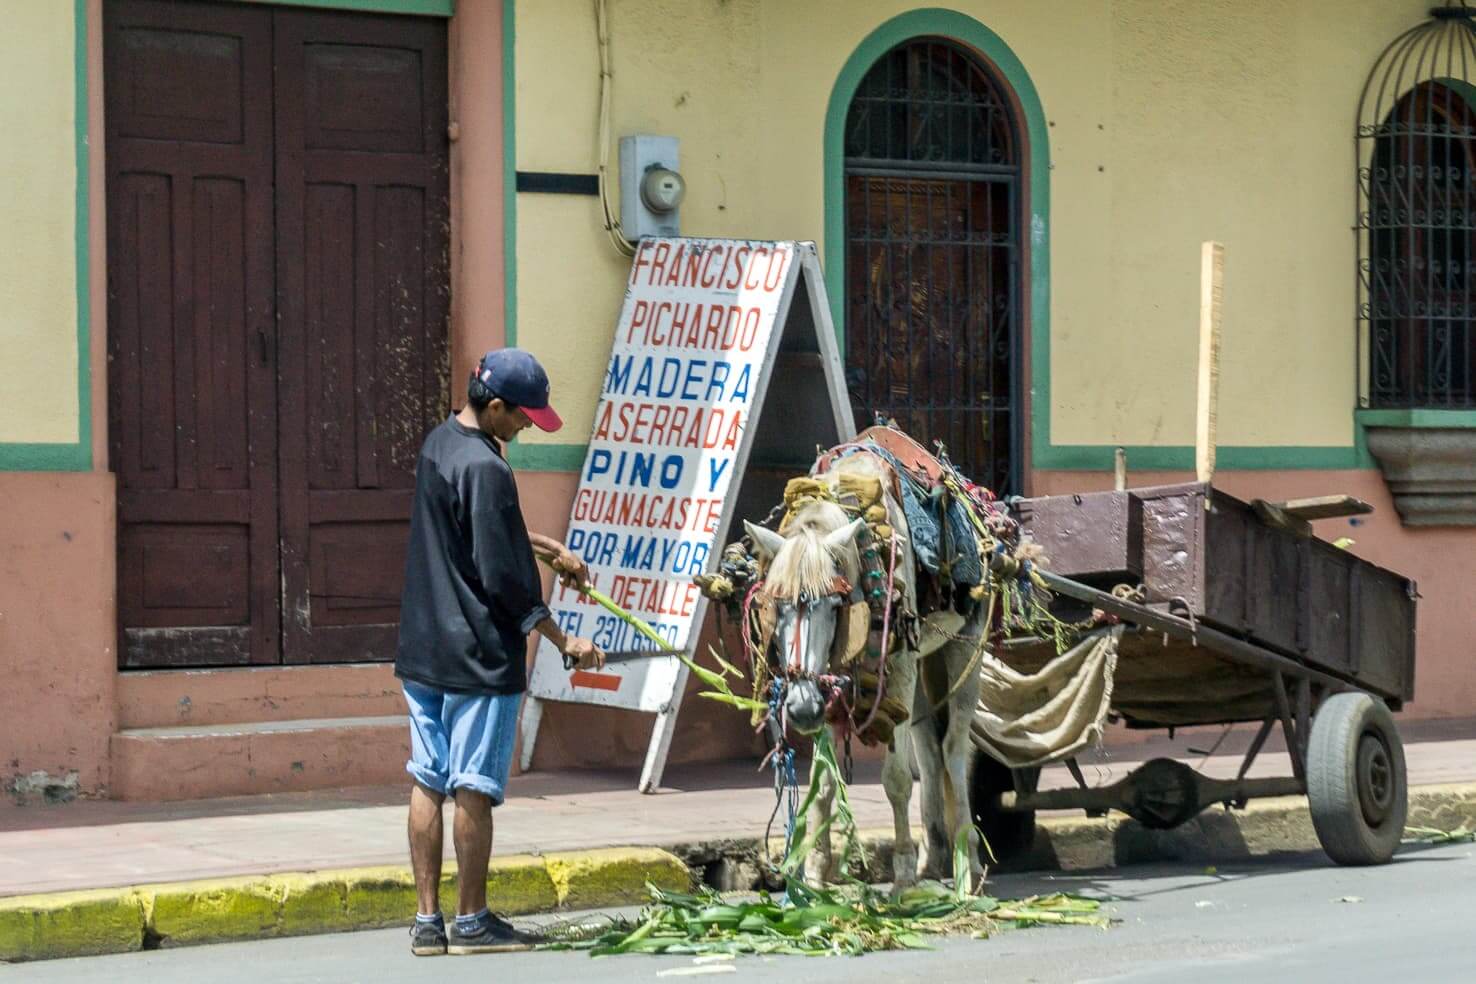 Leon, Nicaragua